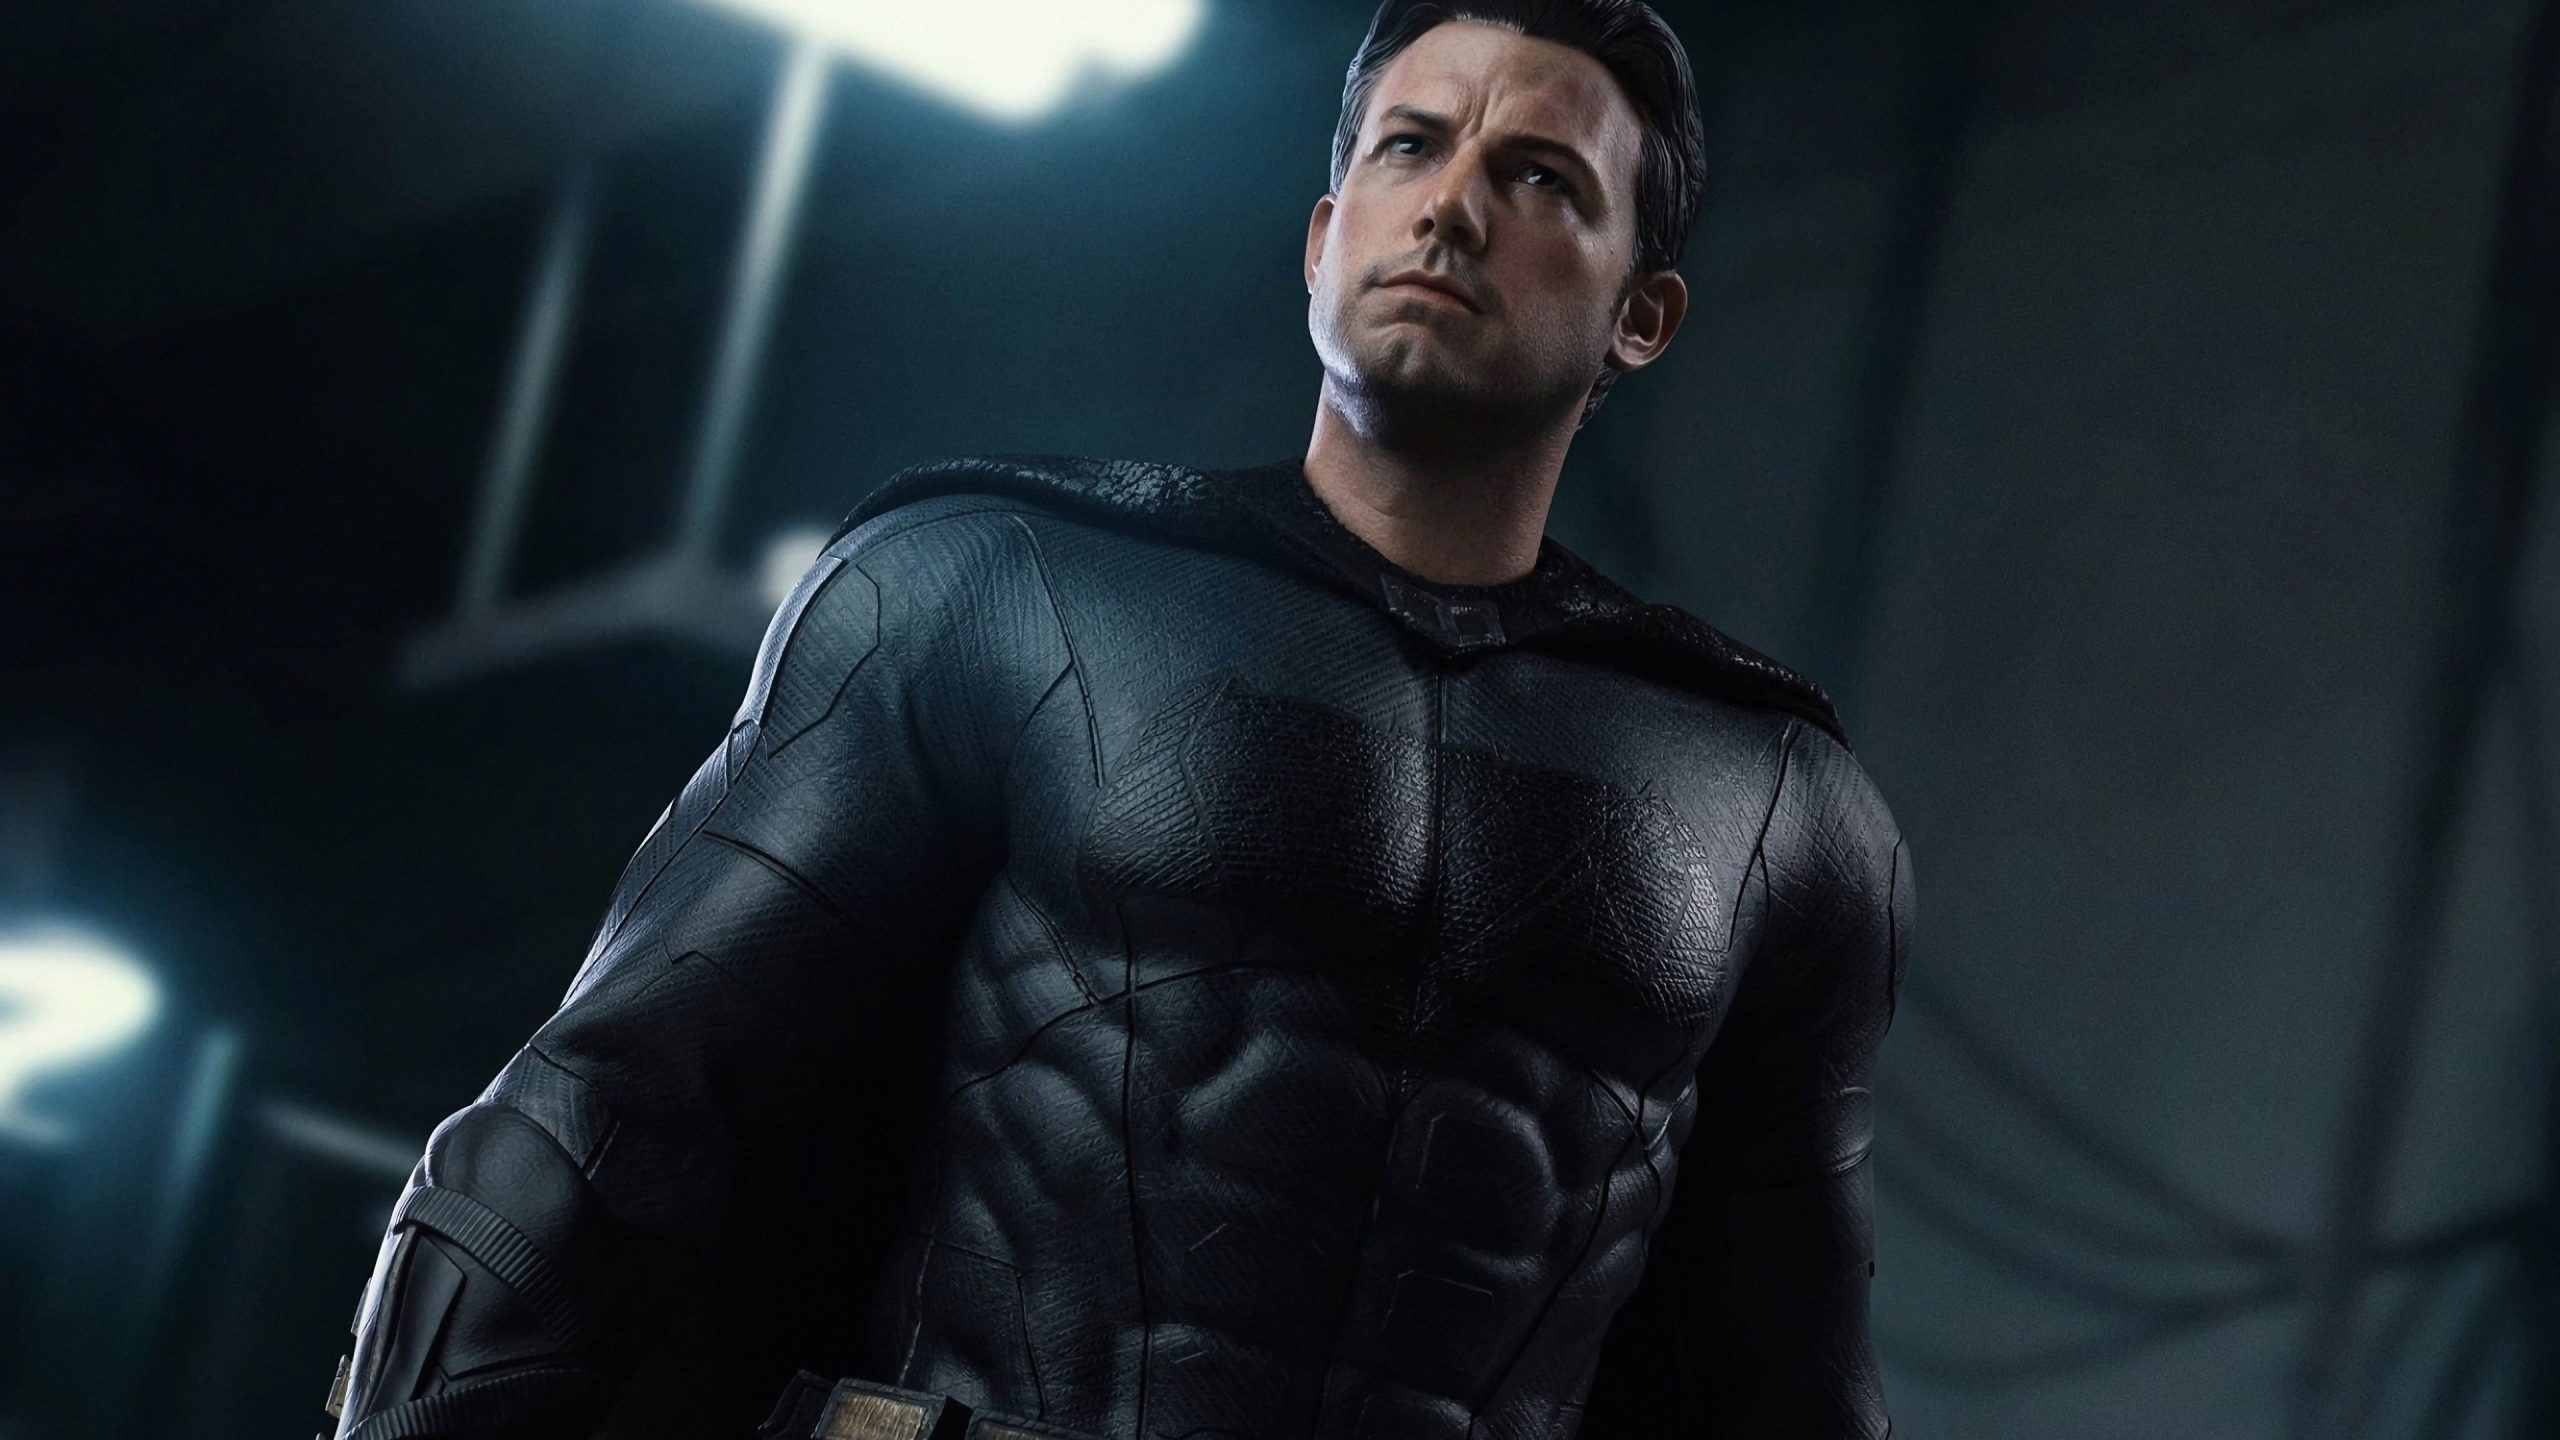 Ben Affleck played the role of Batman.